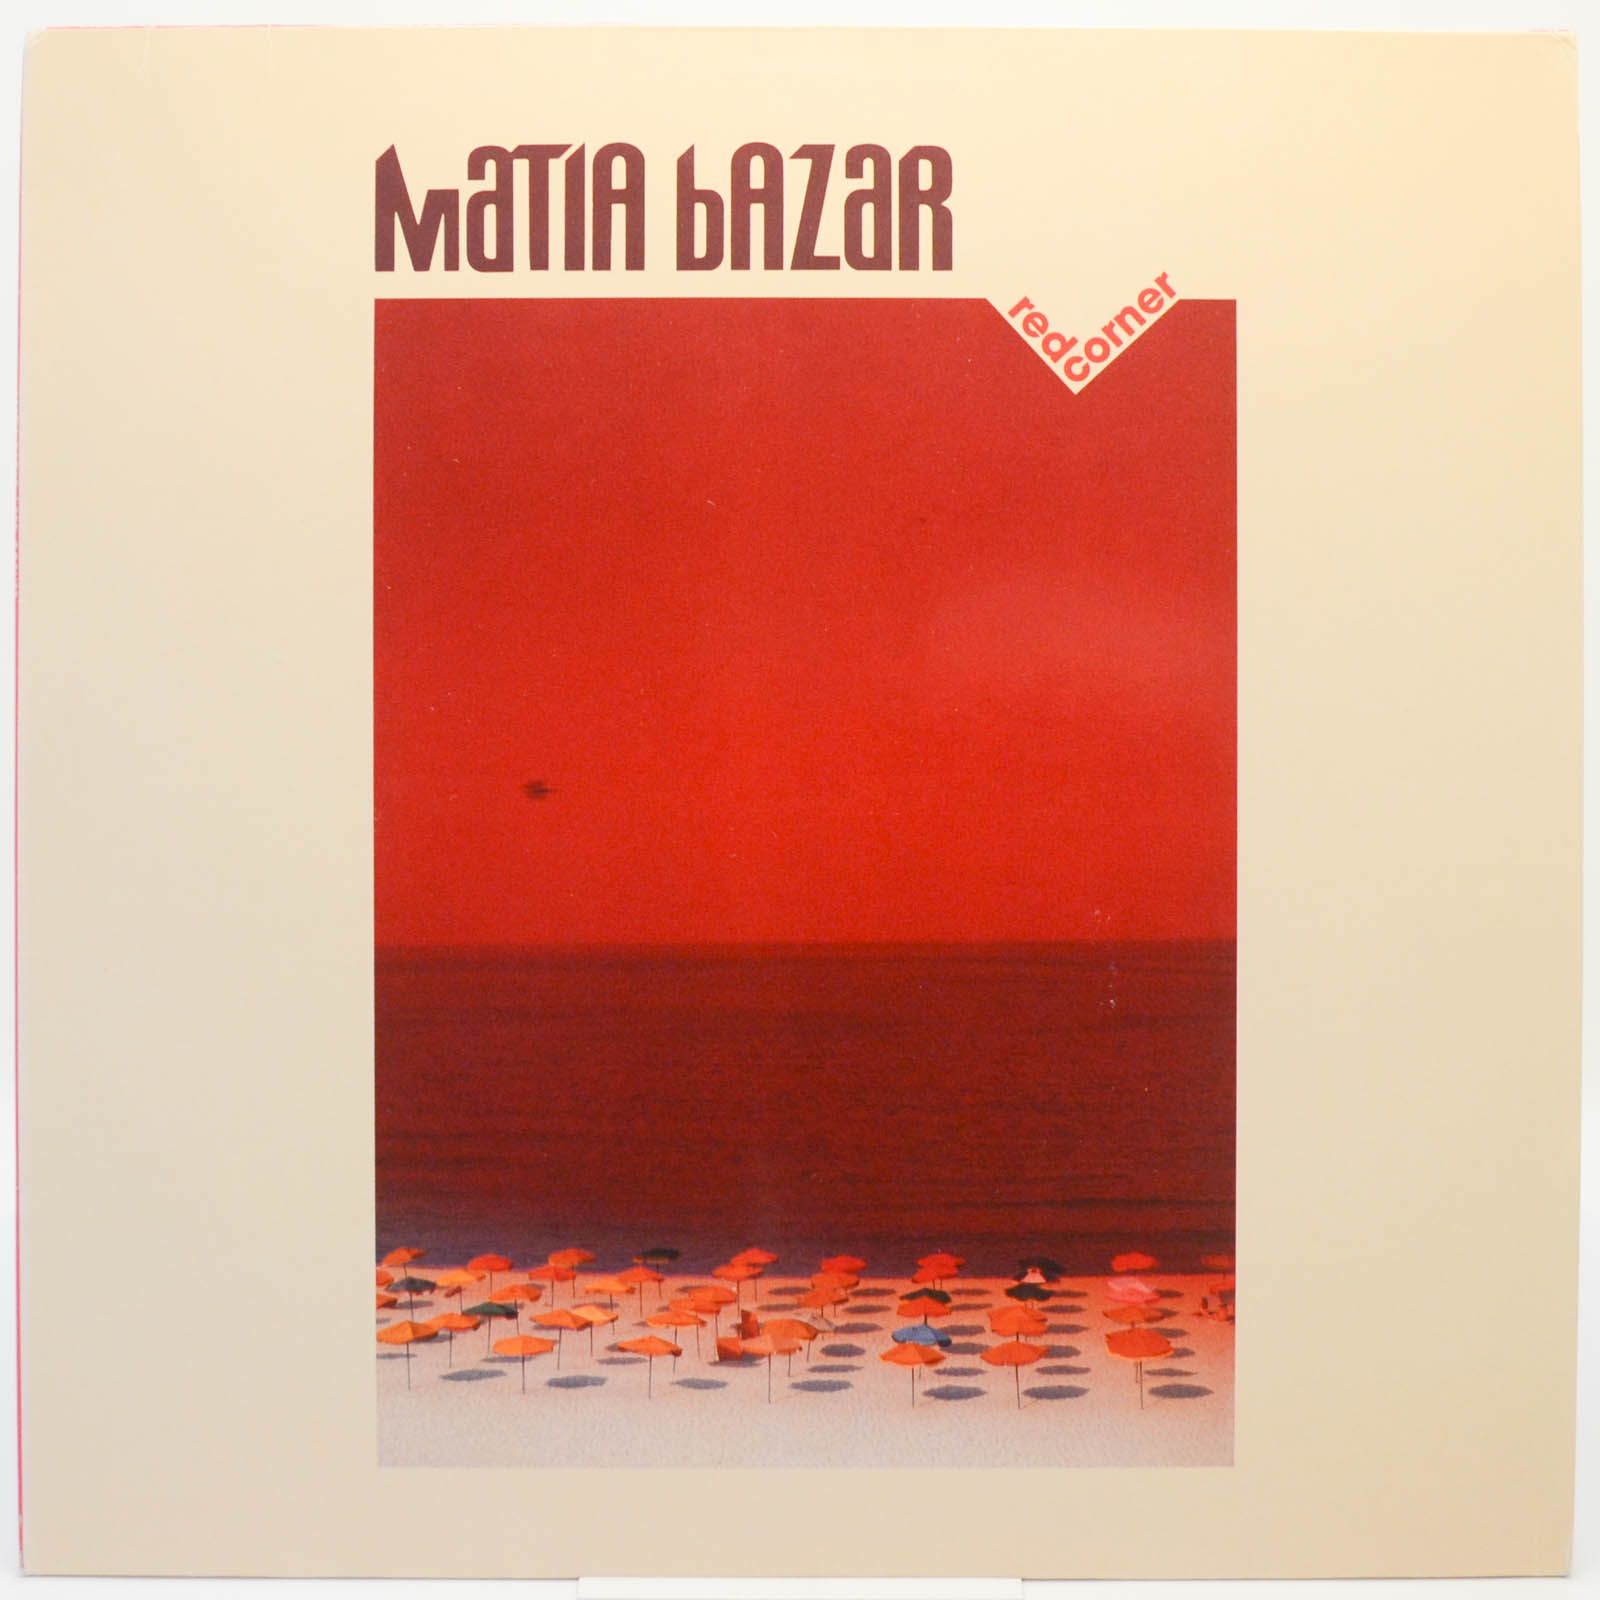 Matia Bazar — Red Corner, 1989